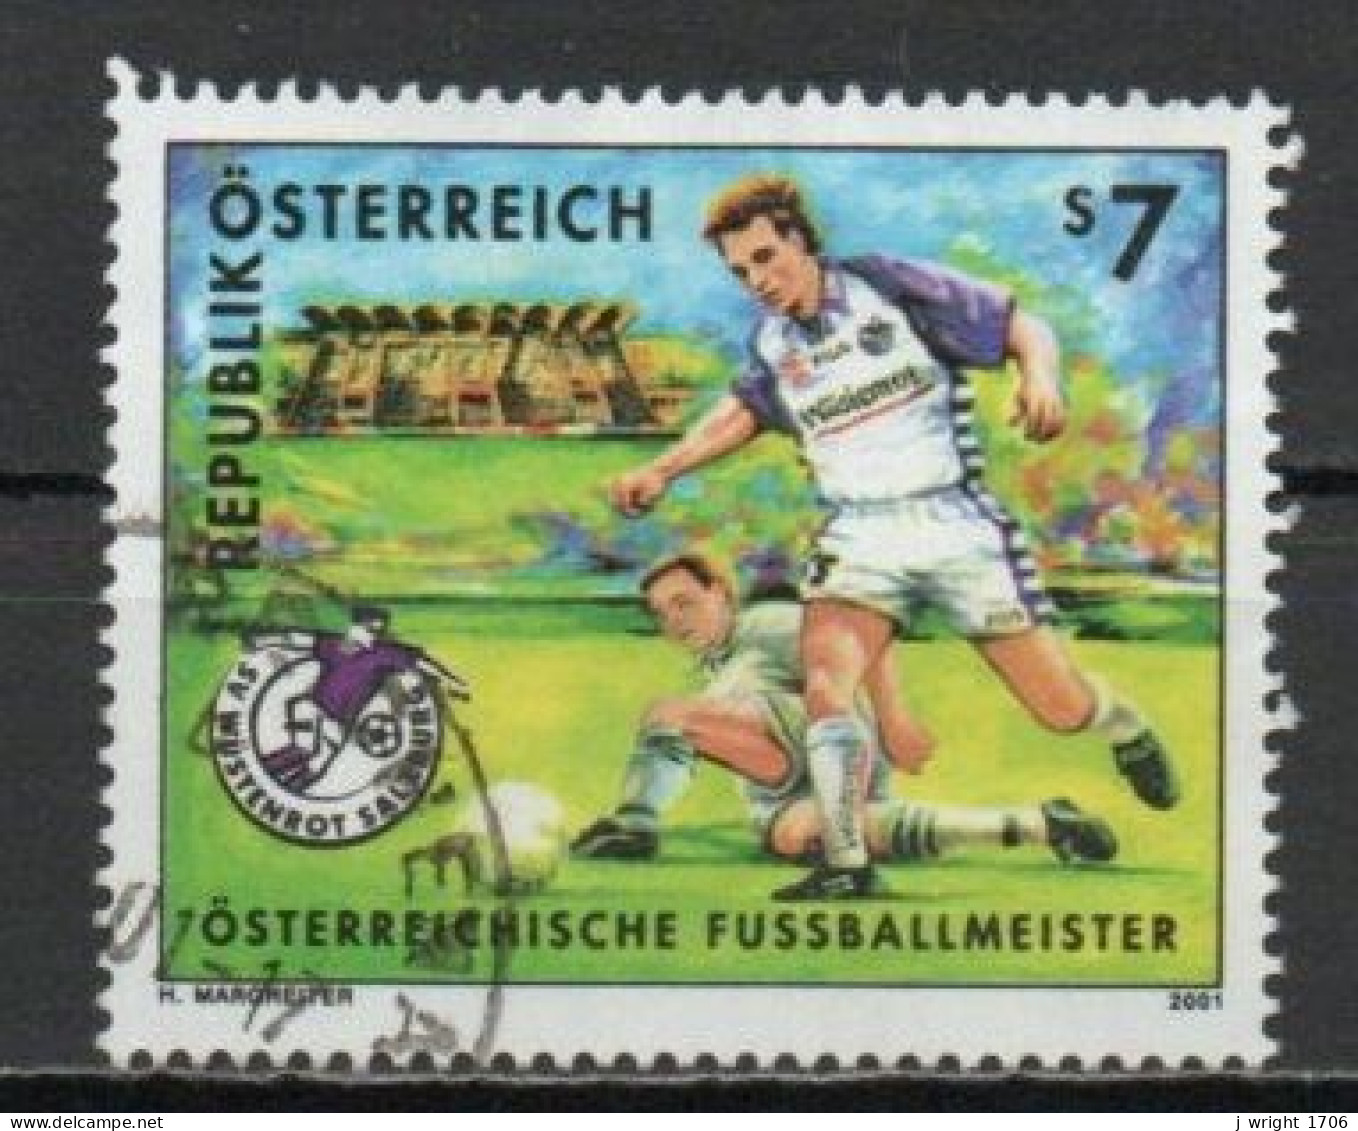 Austria, 2001, SV Wüstenrot Salzburg Austrian Football Champions, 7s, USED - Gebraucht